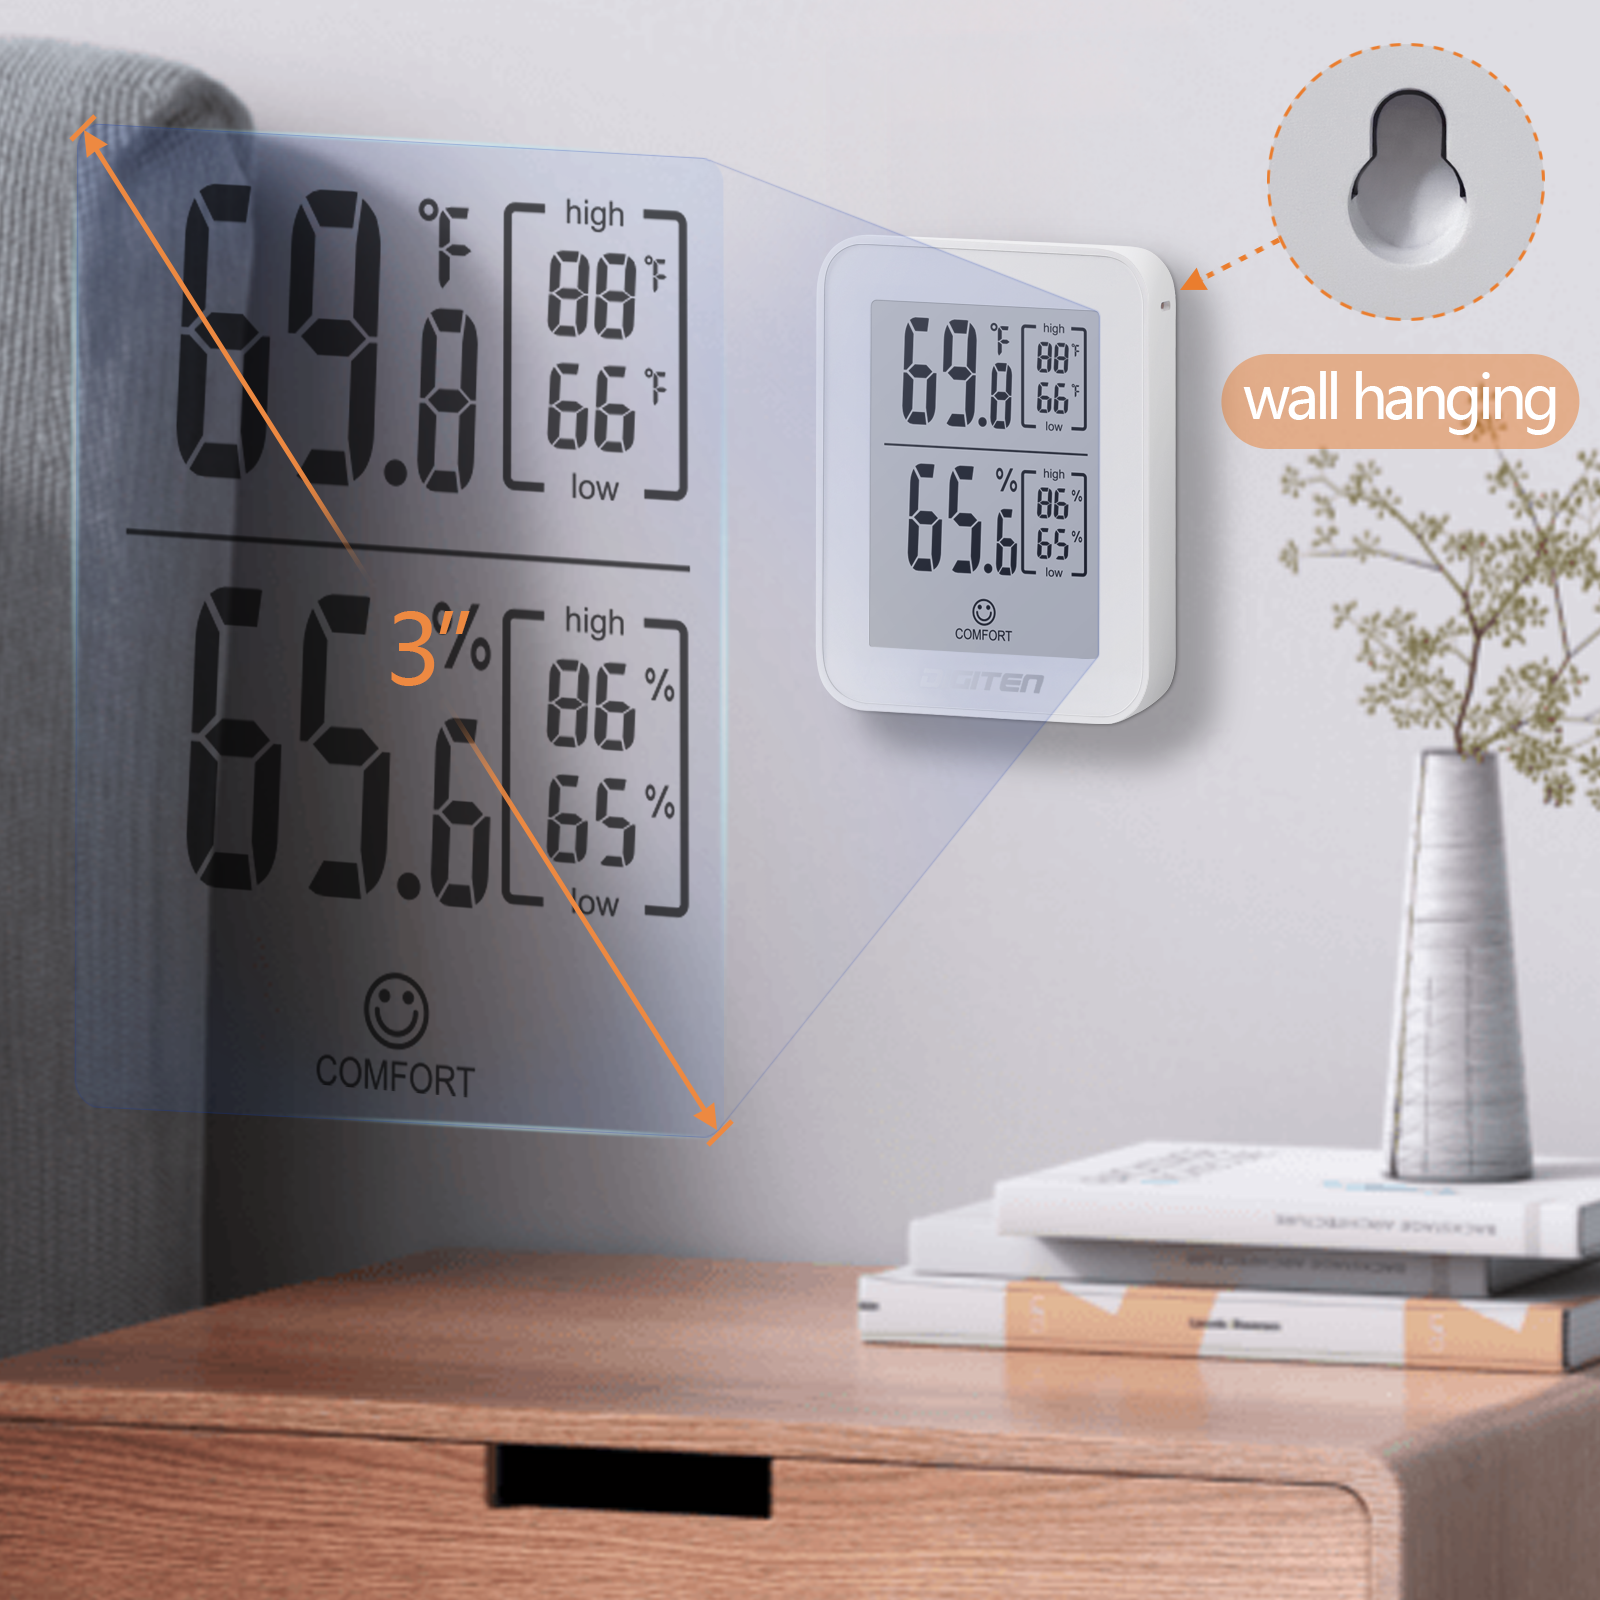 DIGITEN Digital Hygrometer Indoor Thermometer Humidity Meter Rare 360°